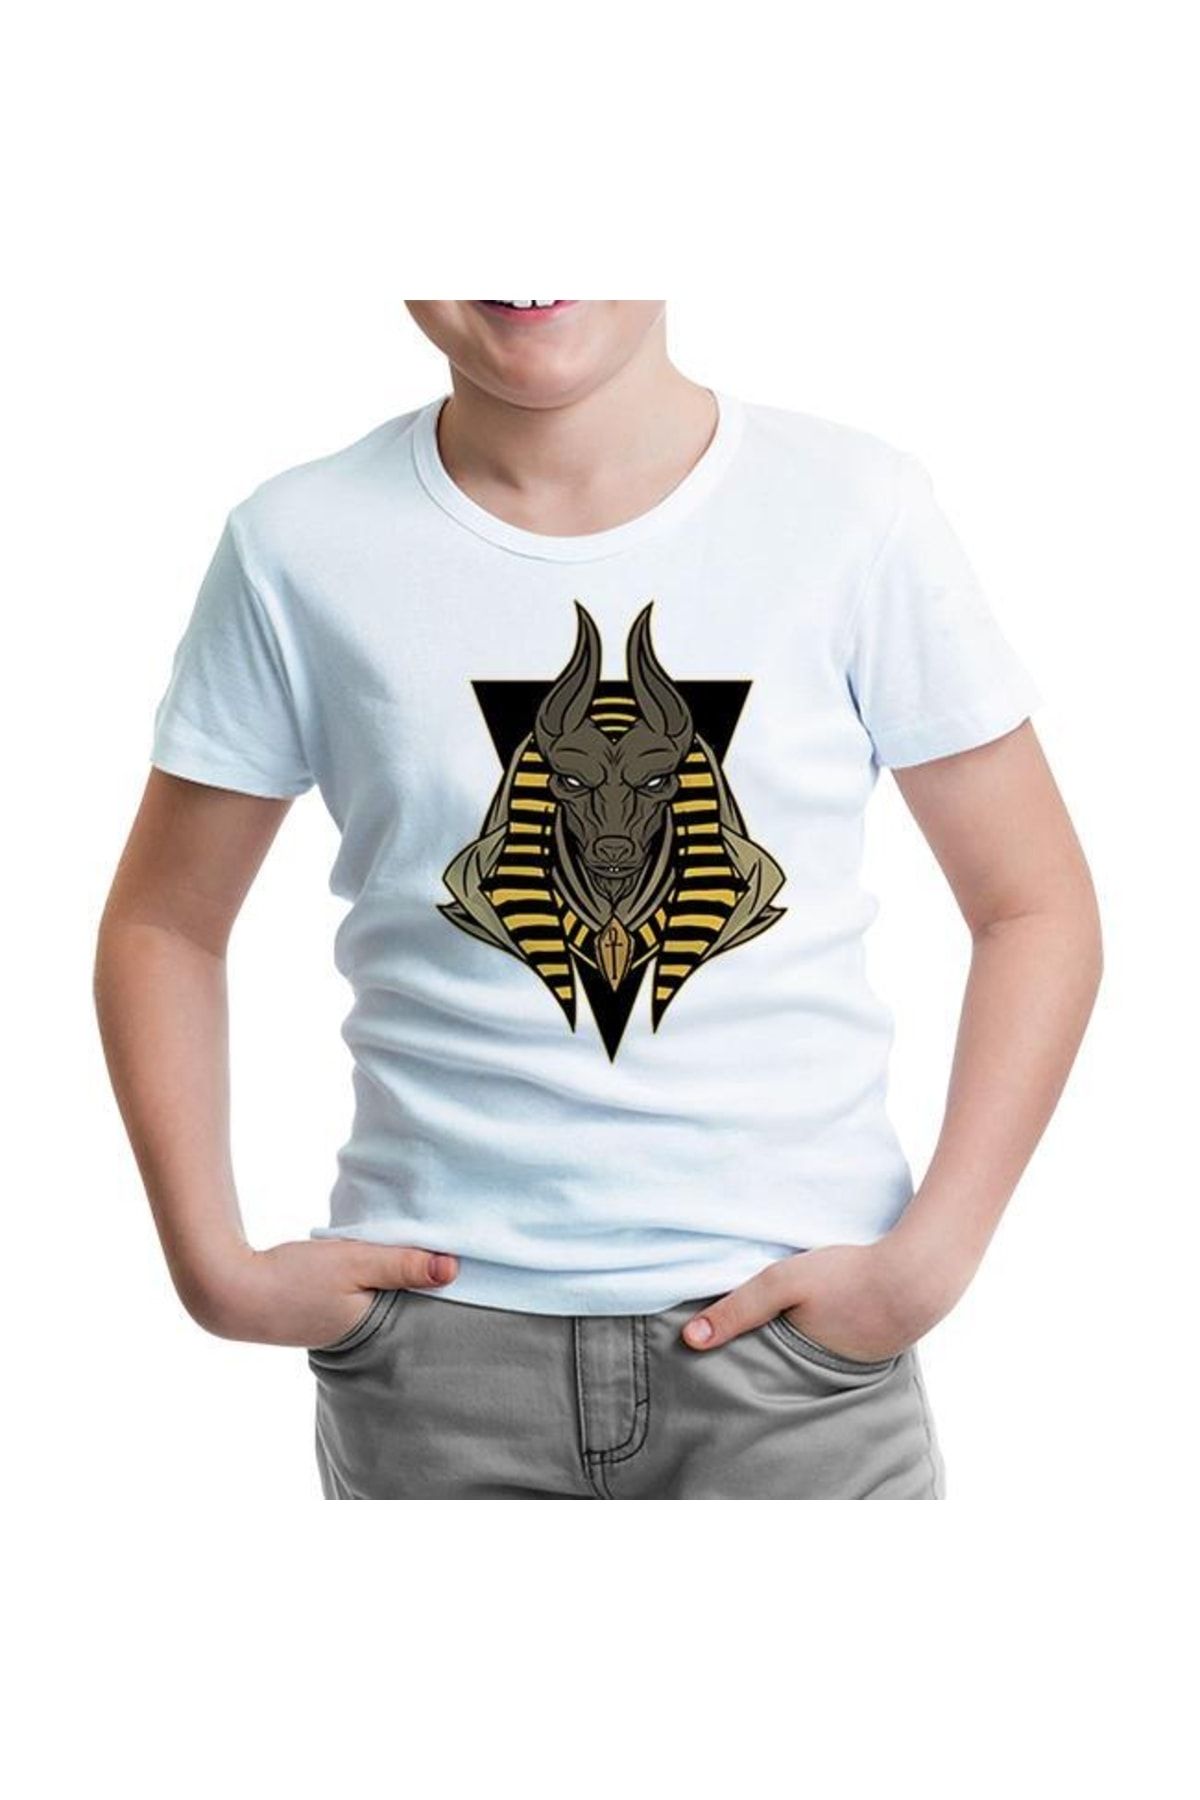 Lord T-Shirt Egyptian God Anubis Beyaz Çocuk Tshirt